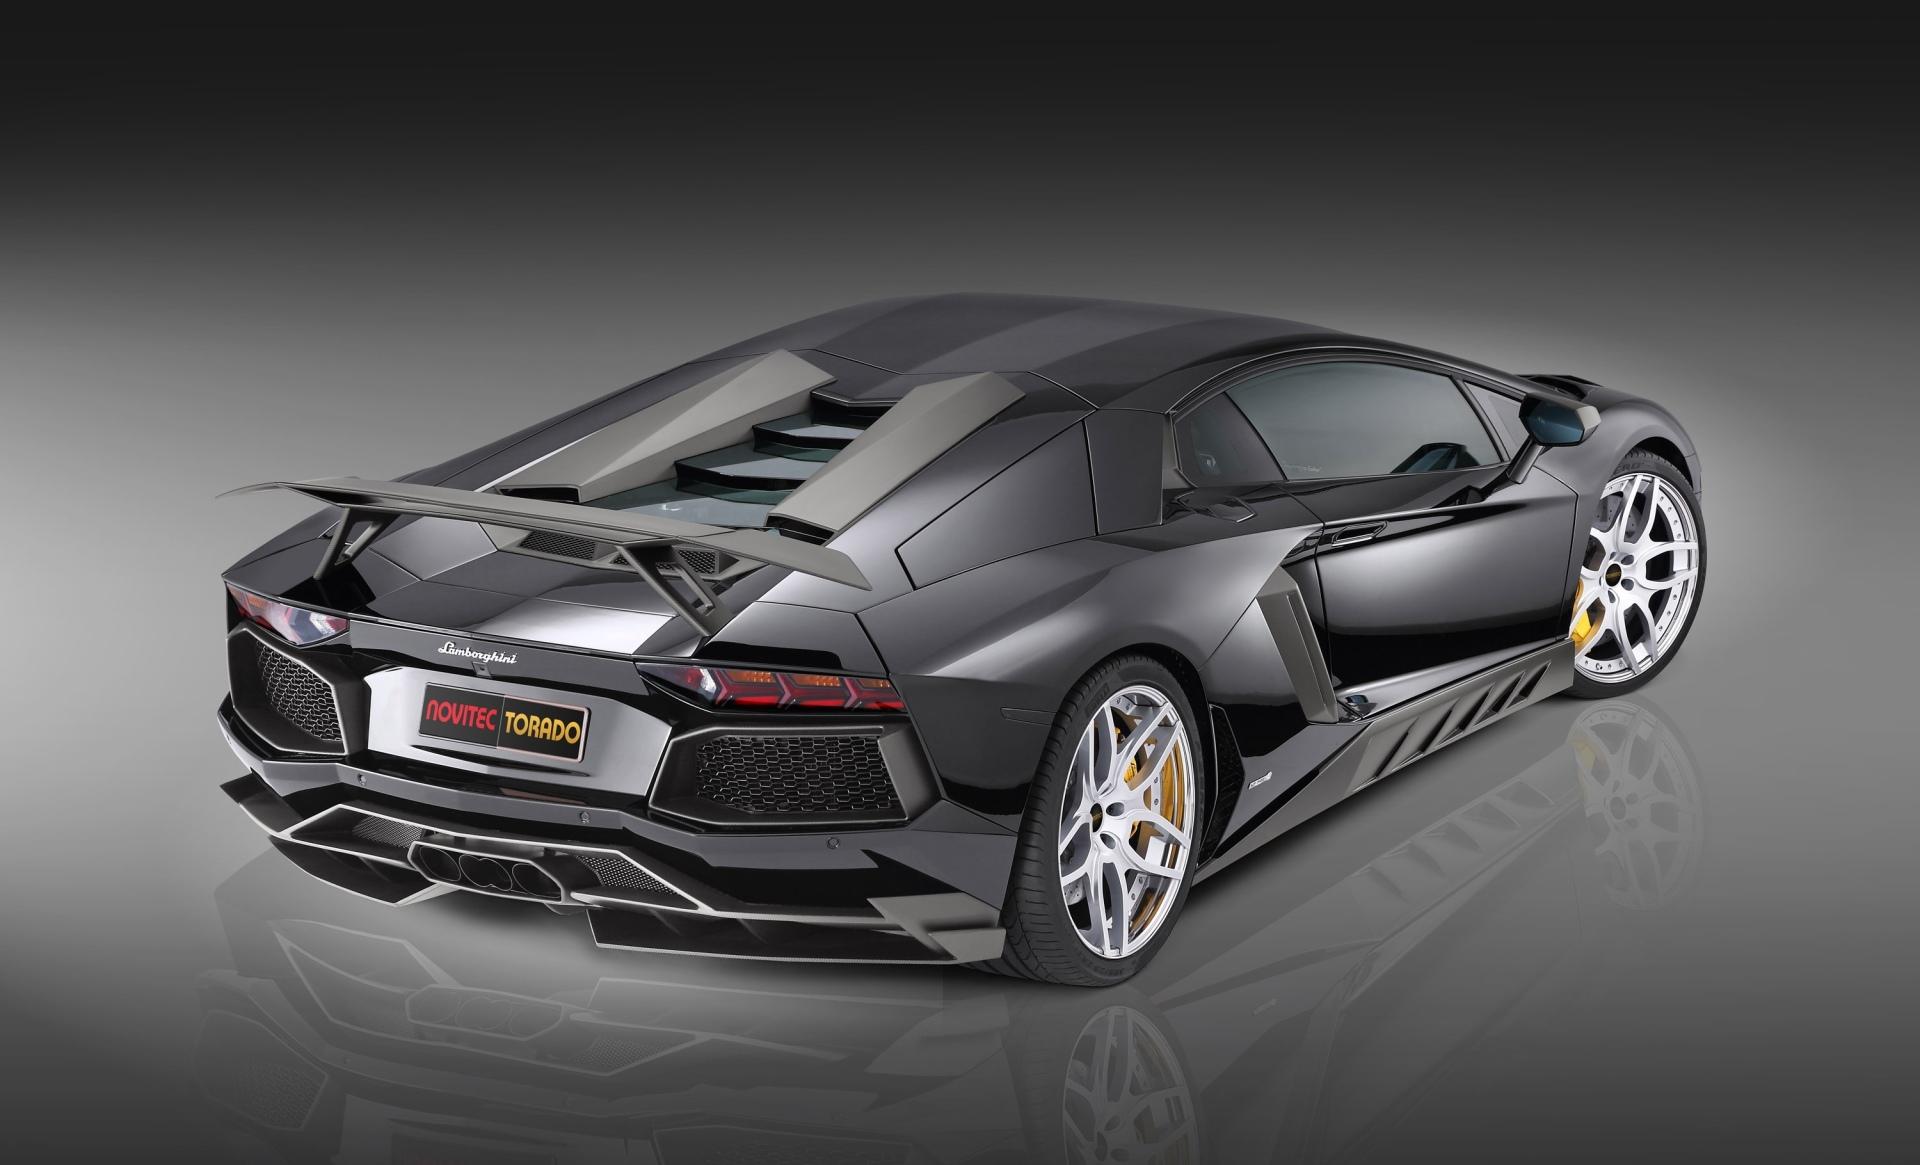 Lamborghini Novitec Torado at 640 x 1136 iPhone 5 size wallpapers HD quality